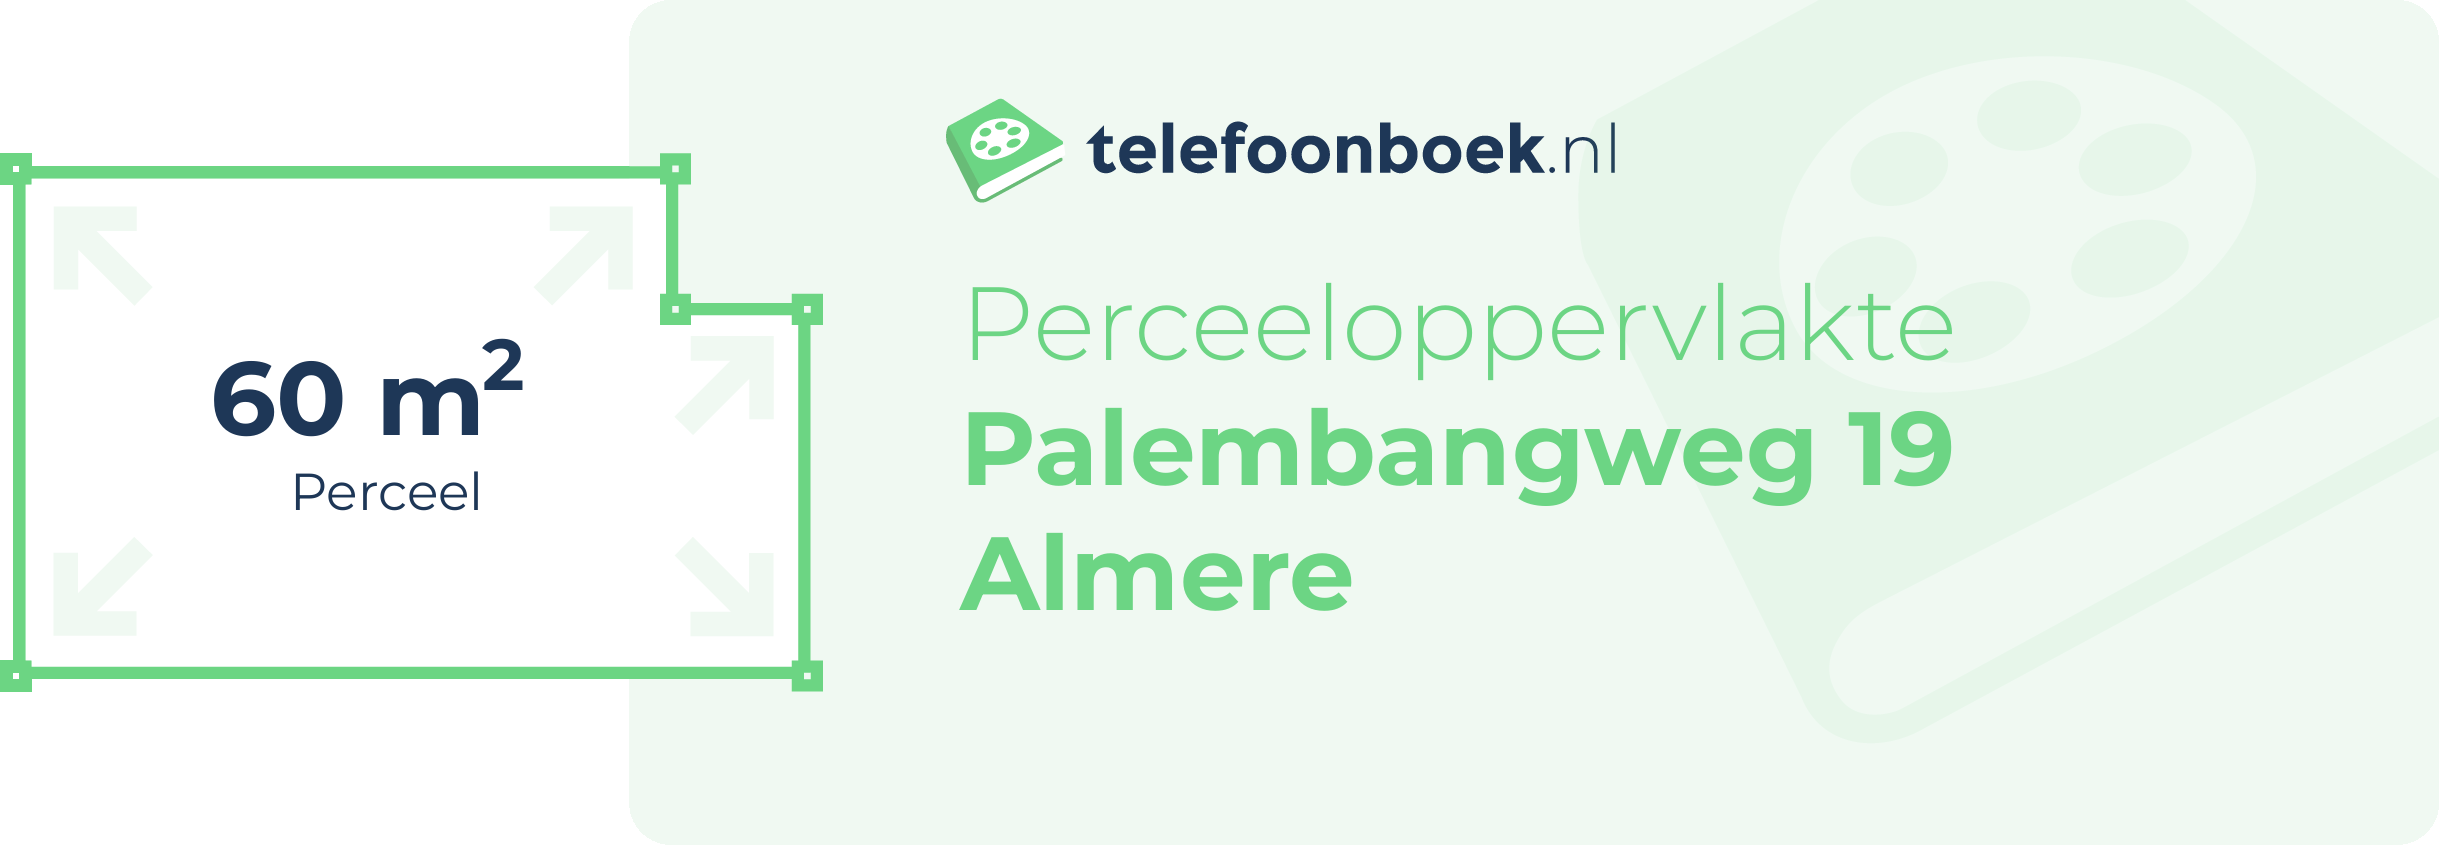 Perceeloppervlakte Palembangweg 19 Almere